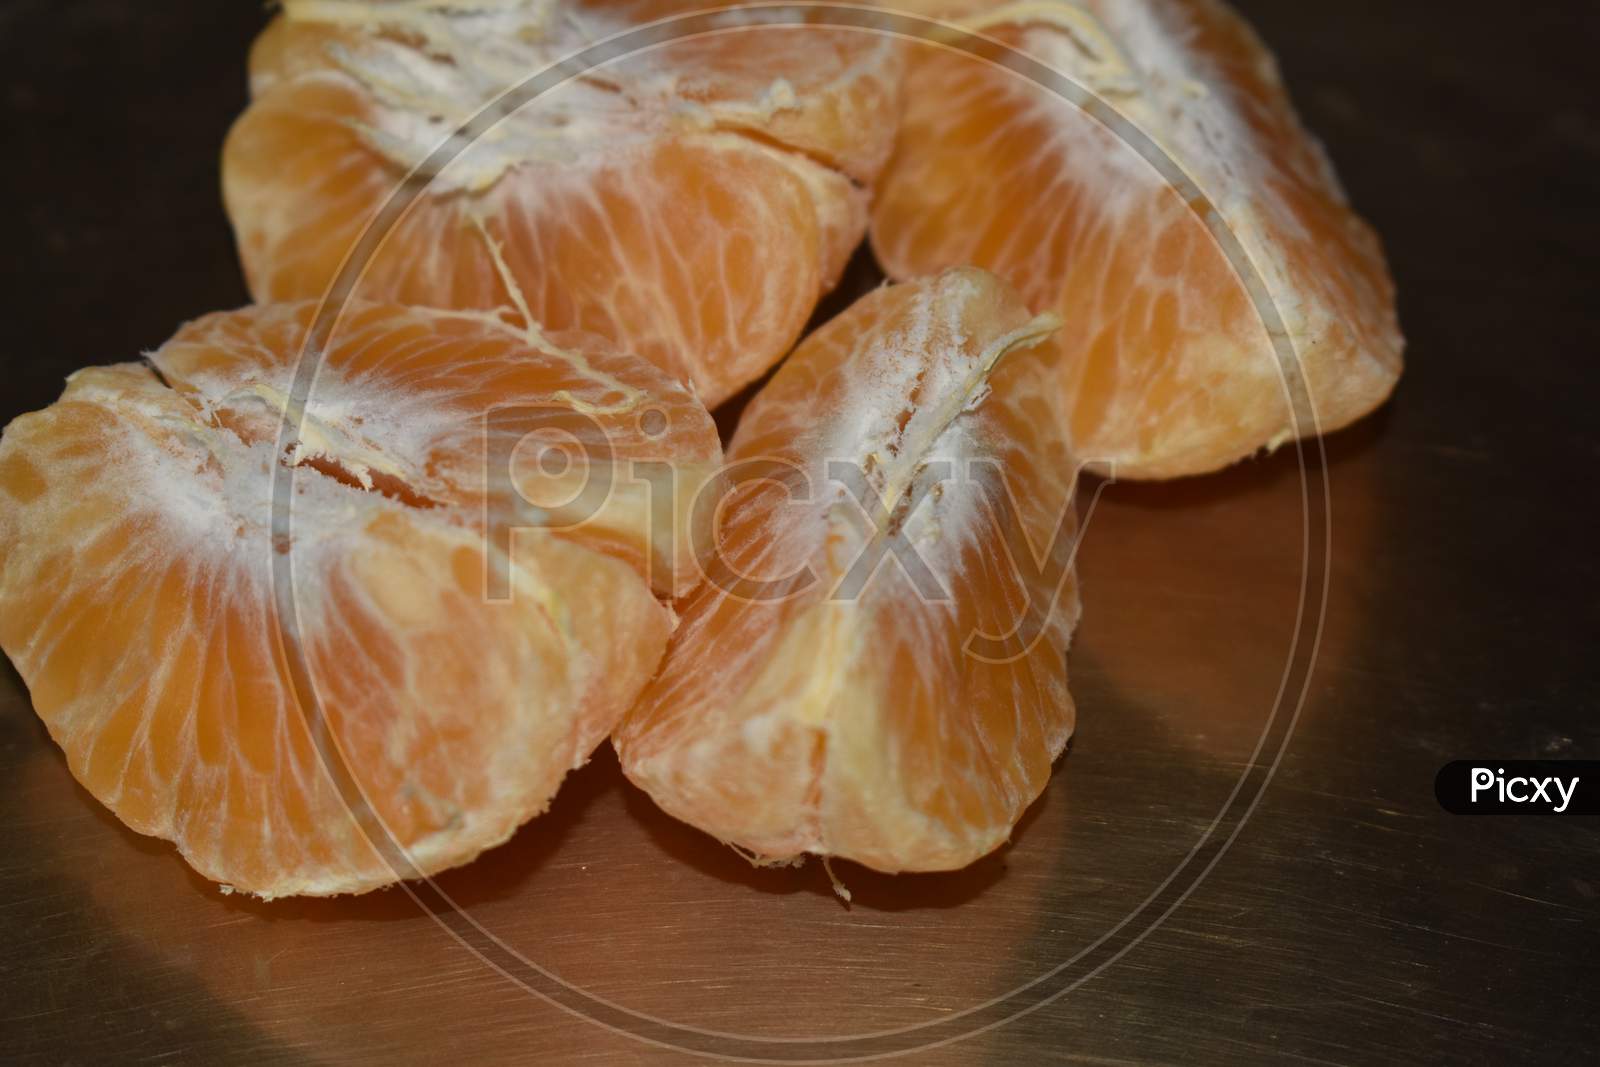 Fresh, juicy pieces of orange peel